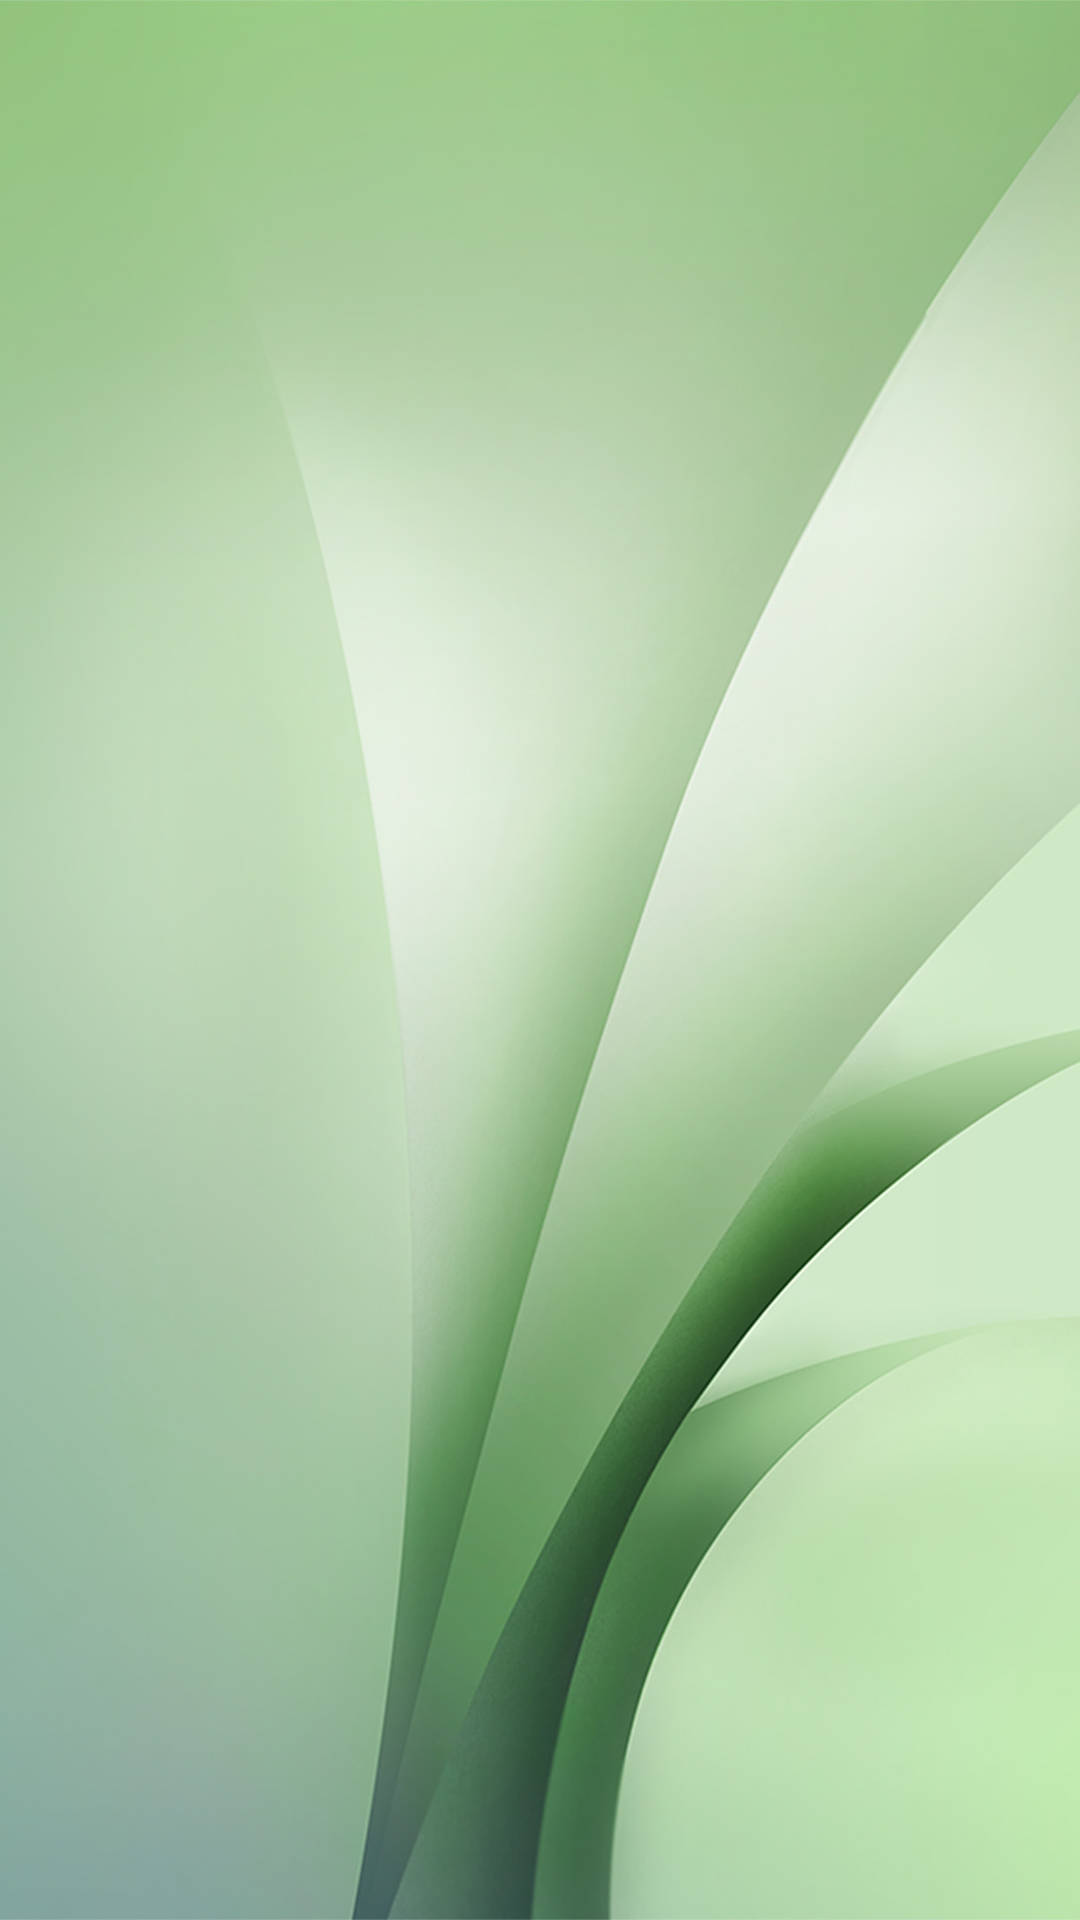 Samsung Galaxy J7 Light Green Abstract Wallpaper